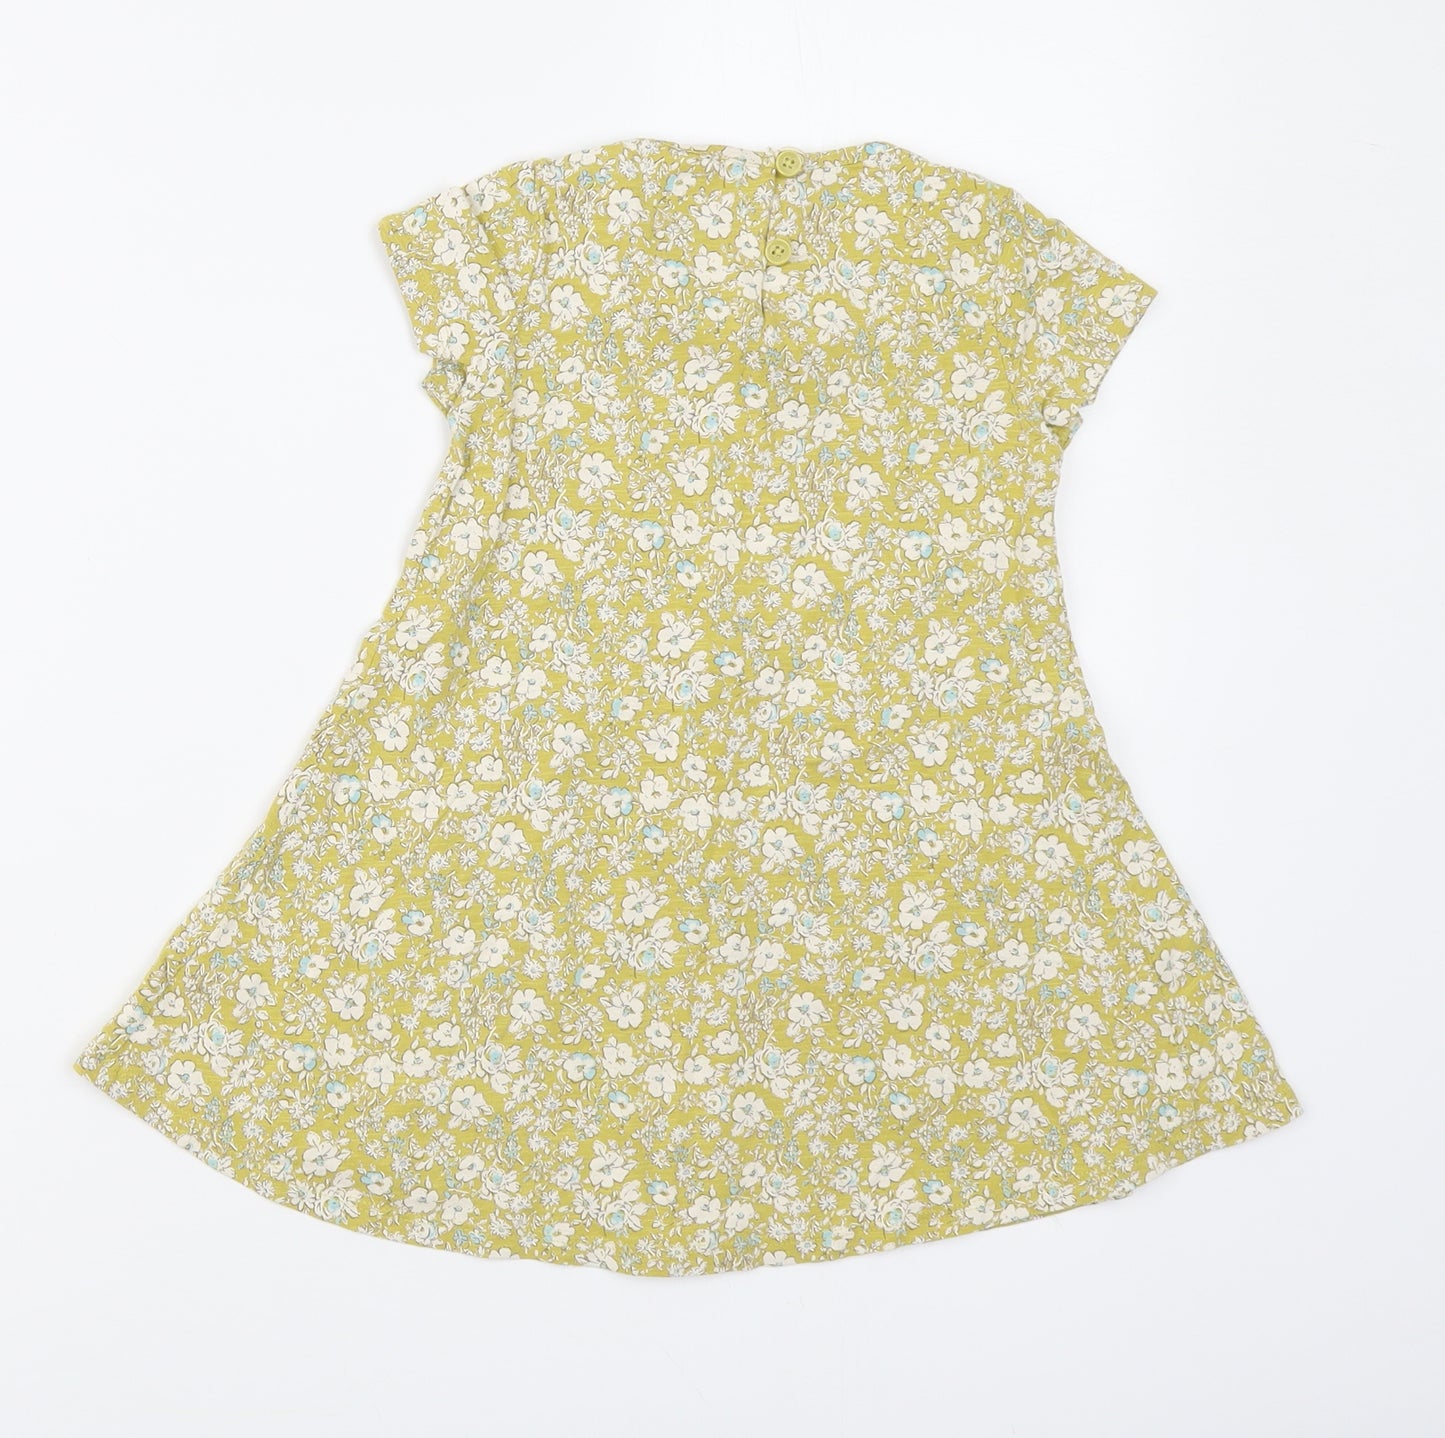 NEXT Girls Yellow Floral Cotton Skater Dress Size 3-4 Years Round Neck Button